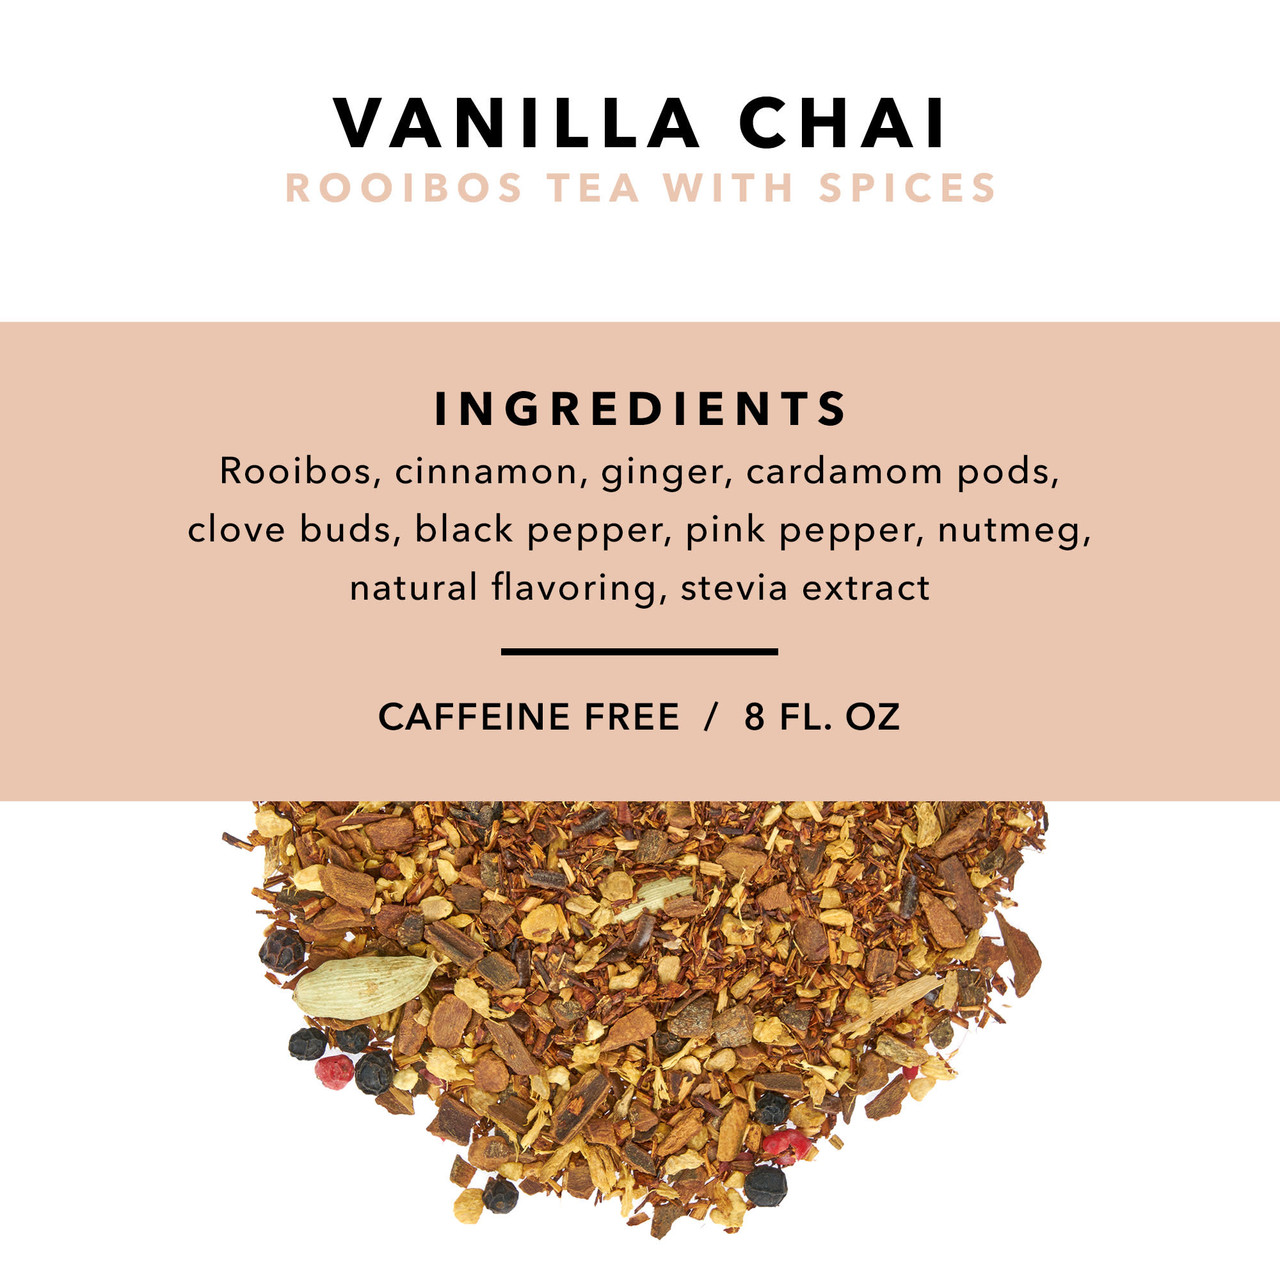 Vanilla Chai Loose Leaf Tea Tins by Pinky Up